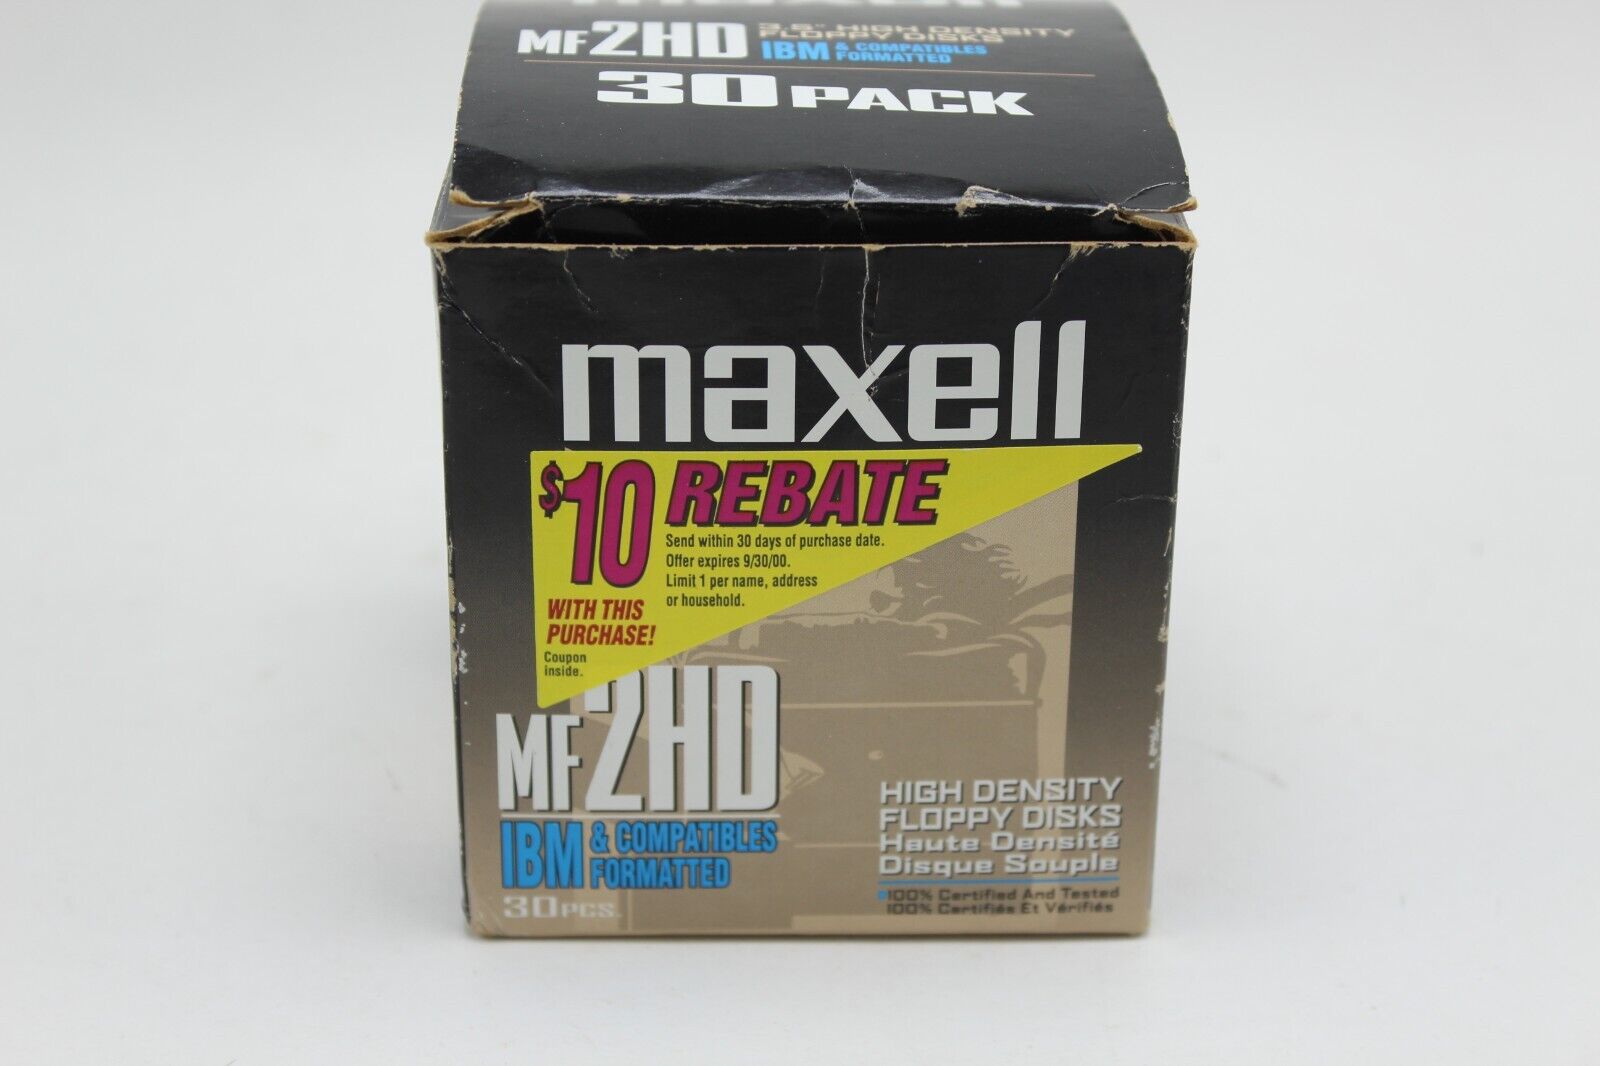 Maxell MF 2HD High Density Floppy Disks IBM 21 open box new